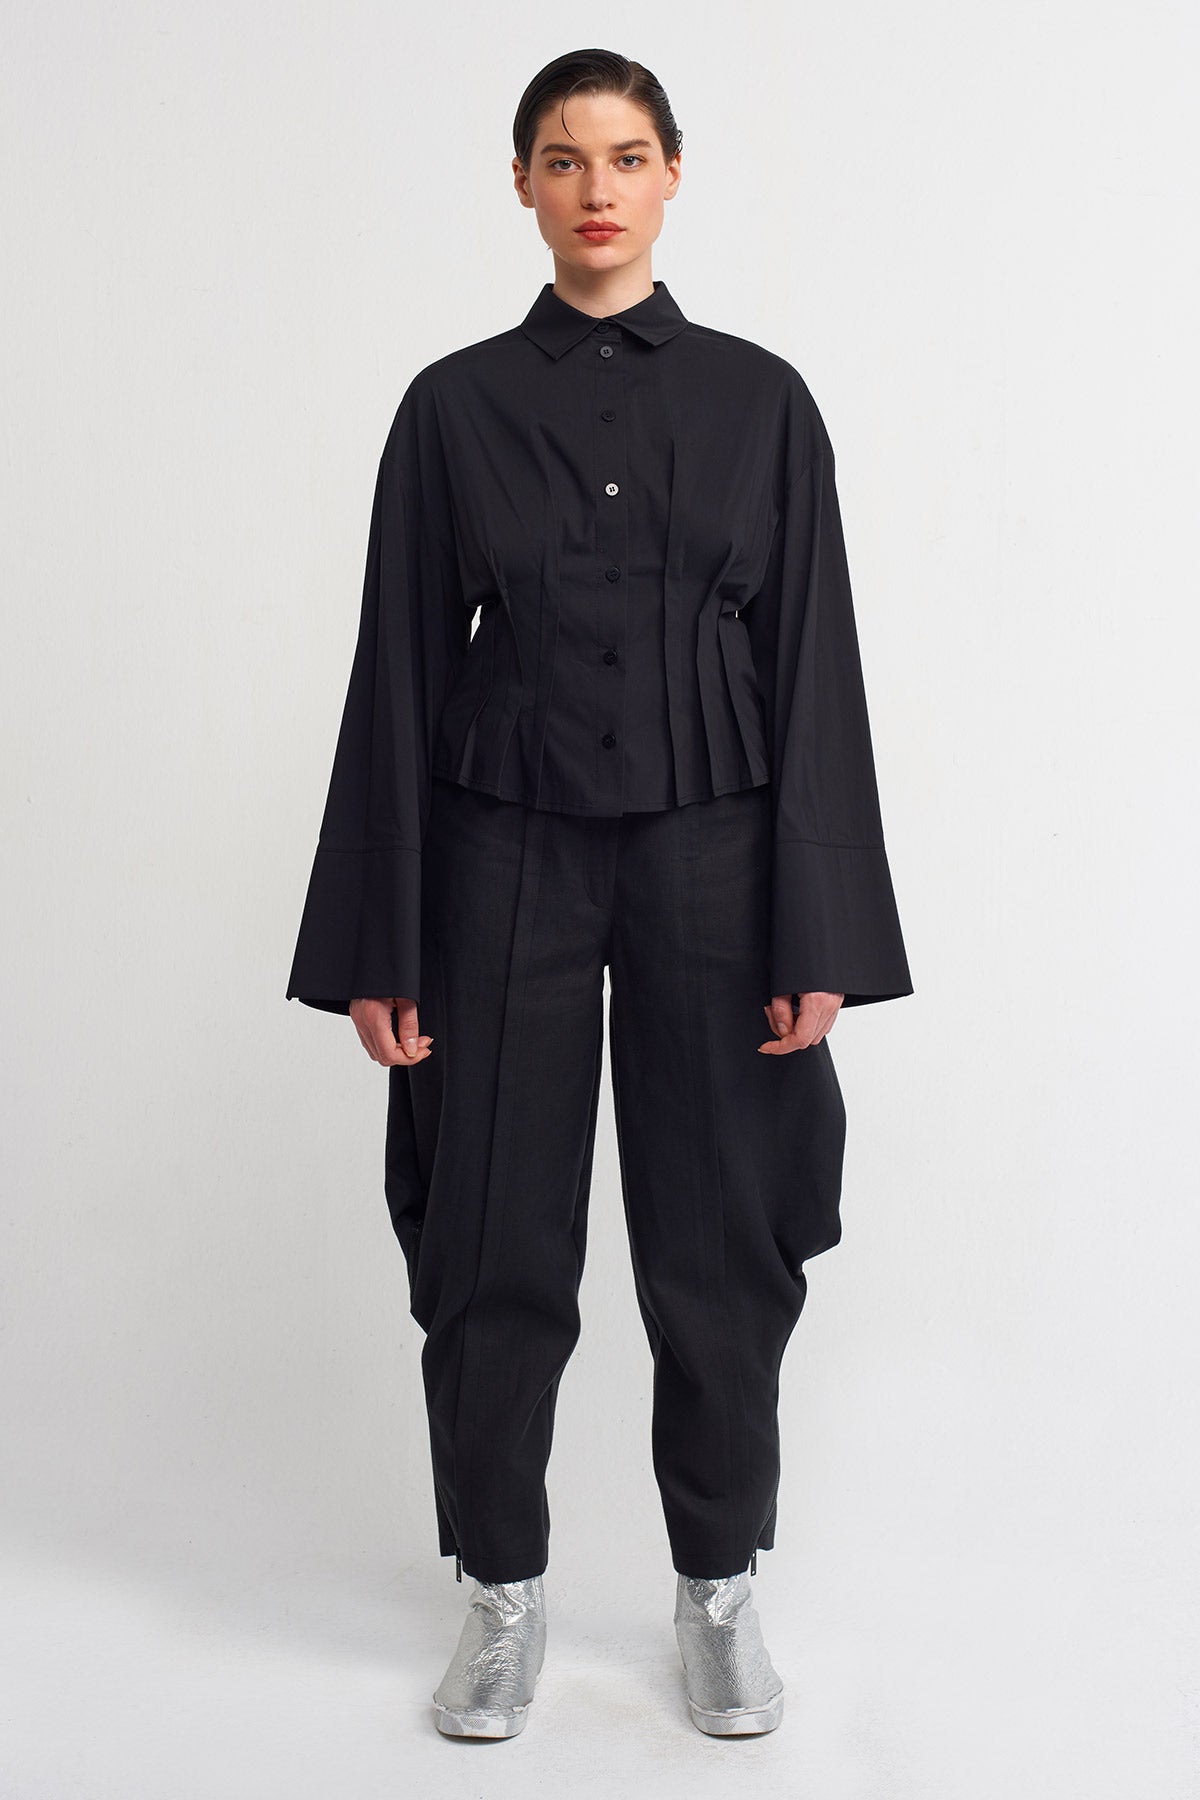 Black Corset Shirt-Y241011050